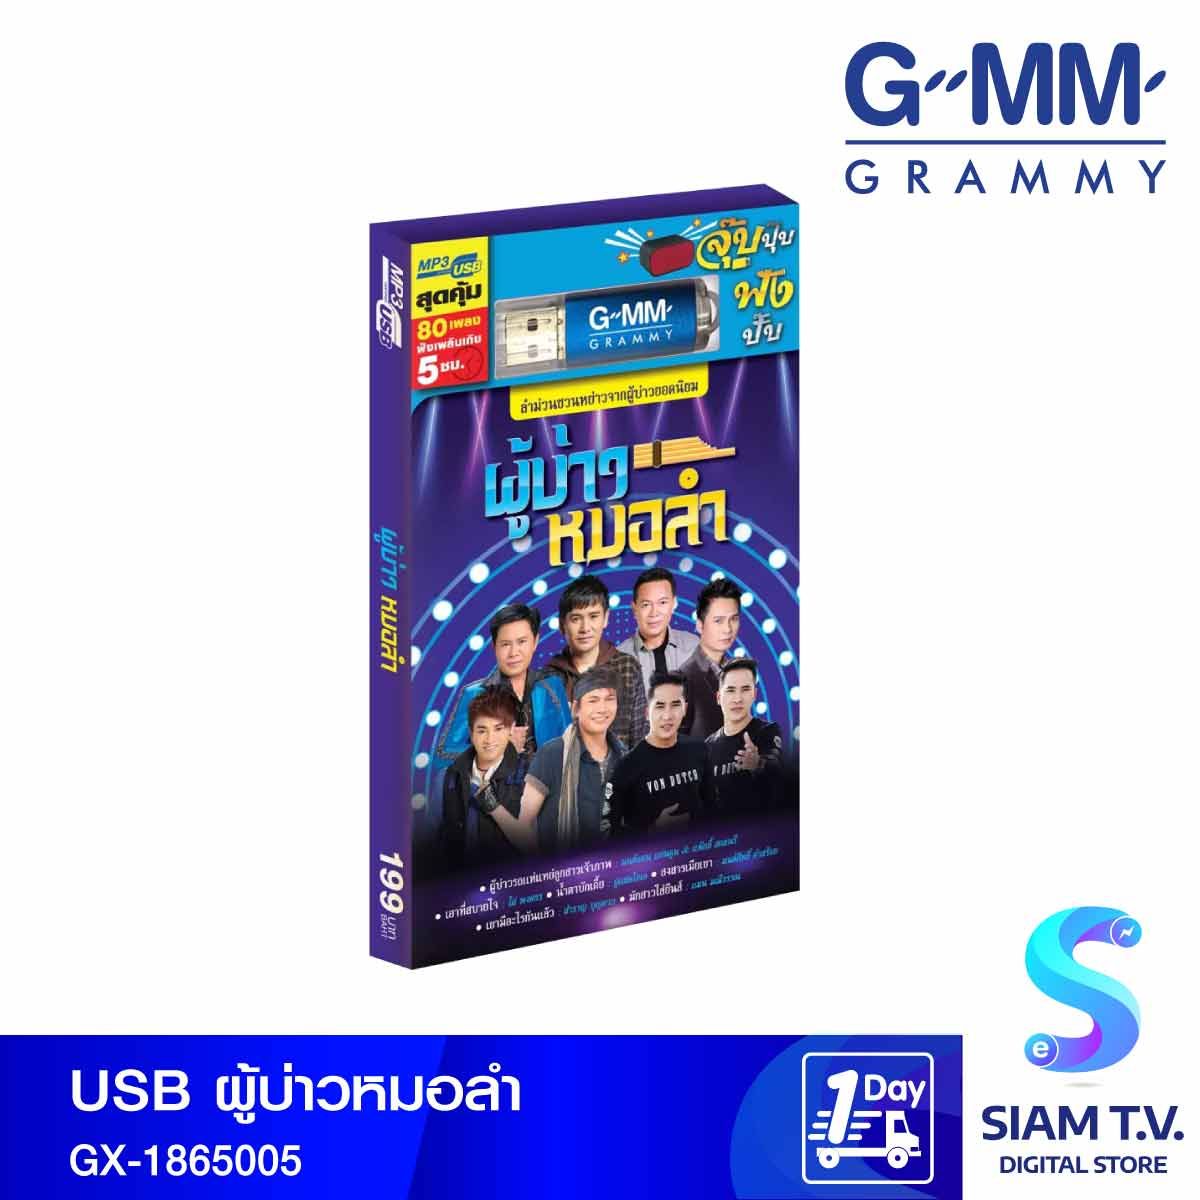 GMM GRAMMY USB MP3 เพลงผู้บ่าวหมอลำ GX-1865005